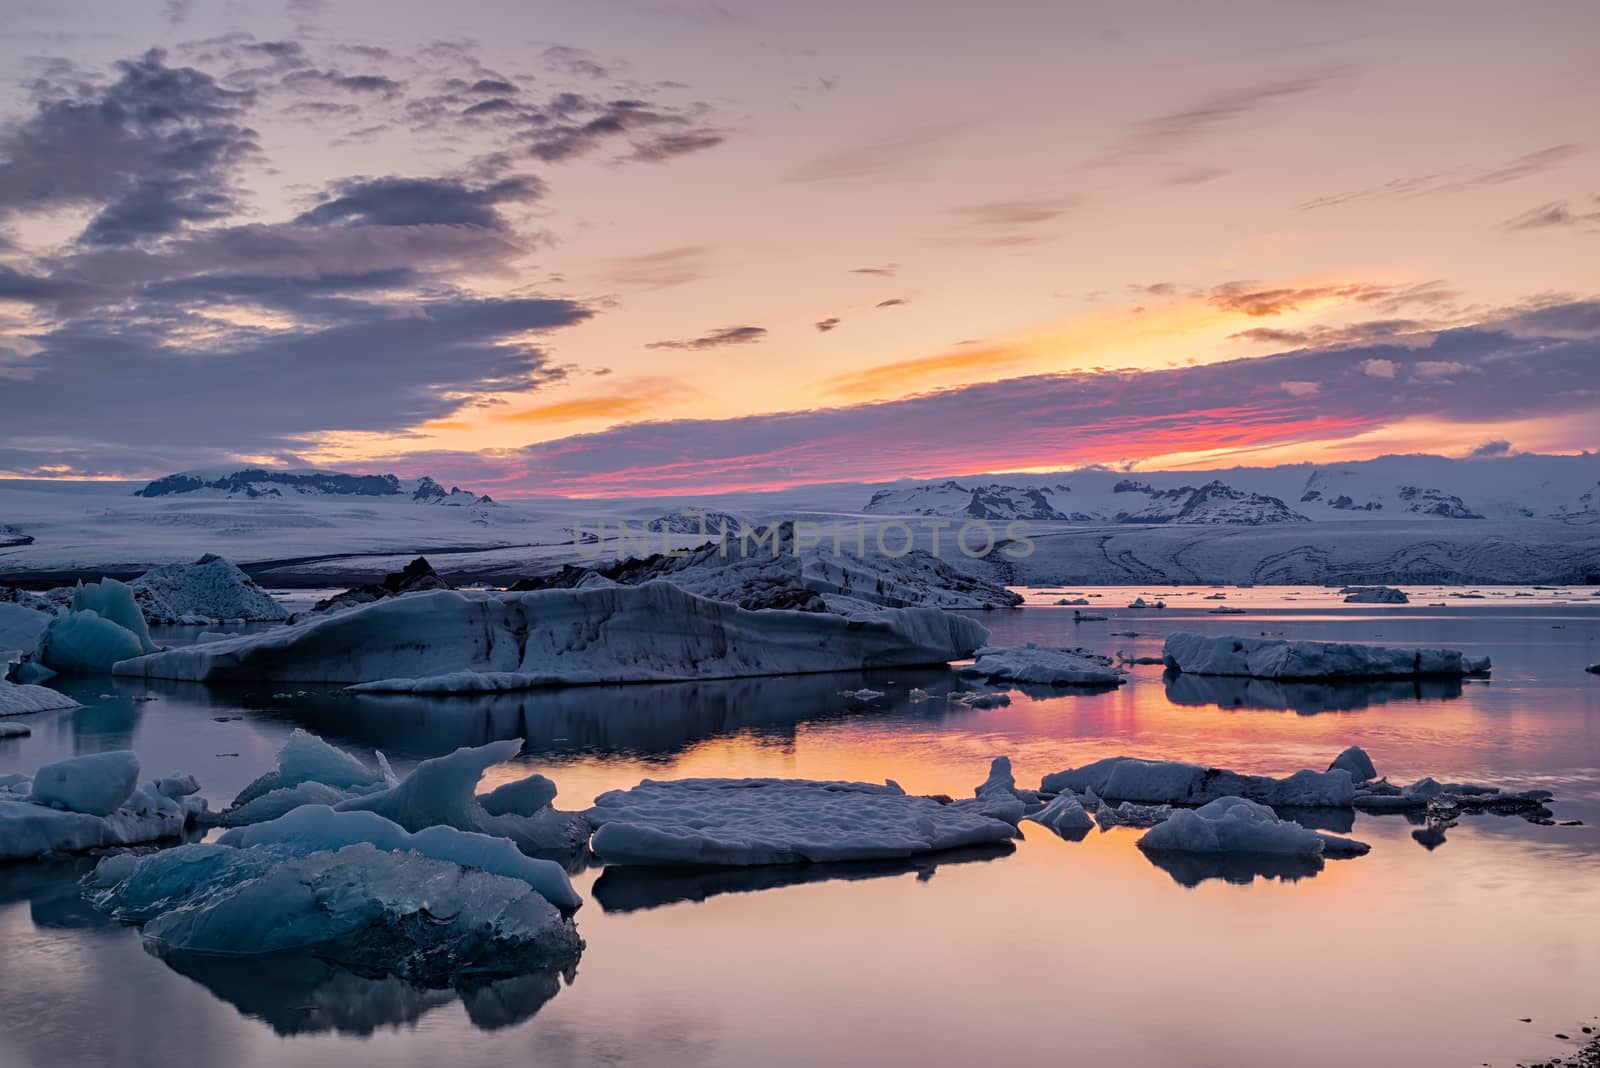 Sunset in Jokulsarlon, Iceland by LuigiMorbidelli